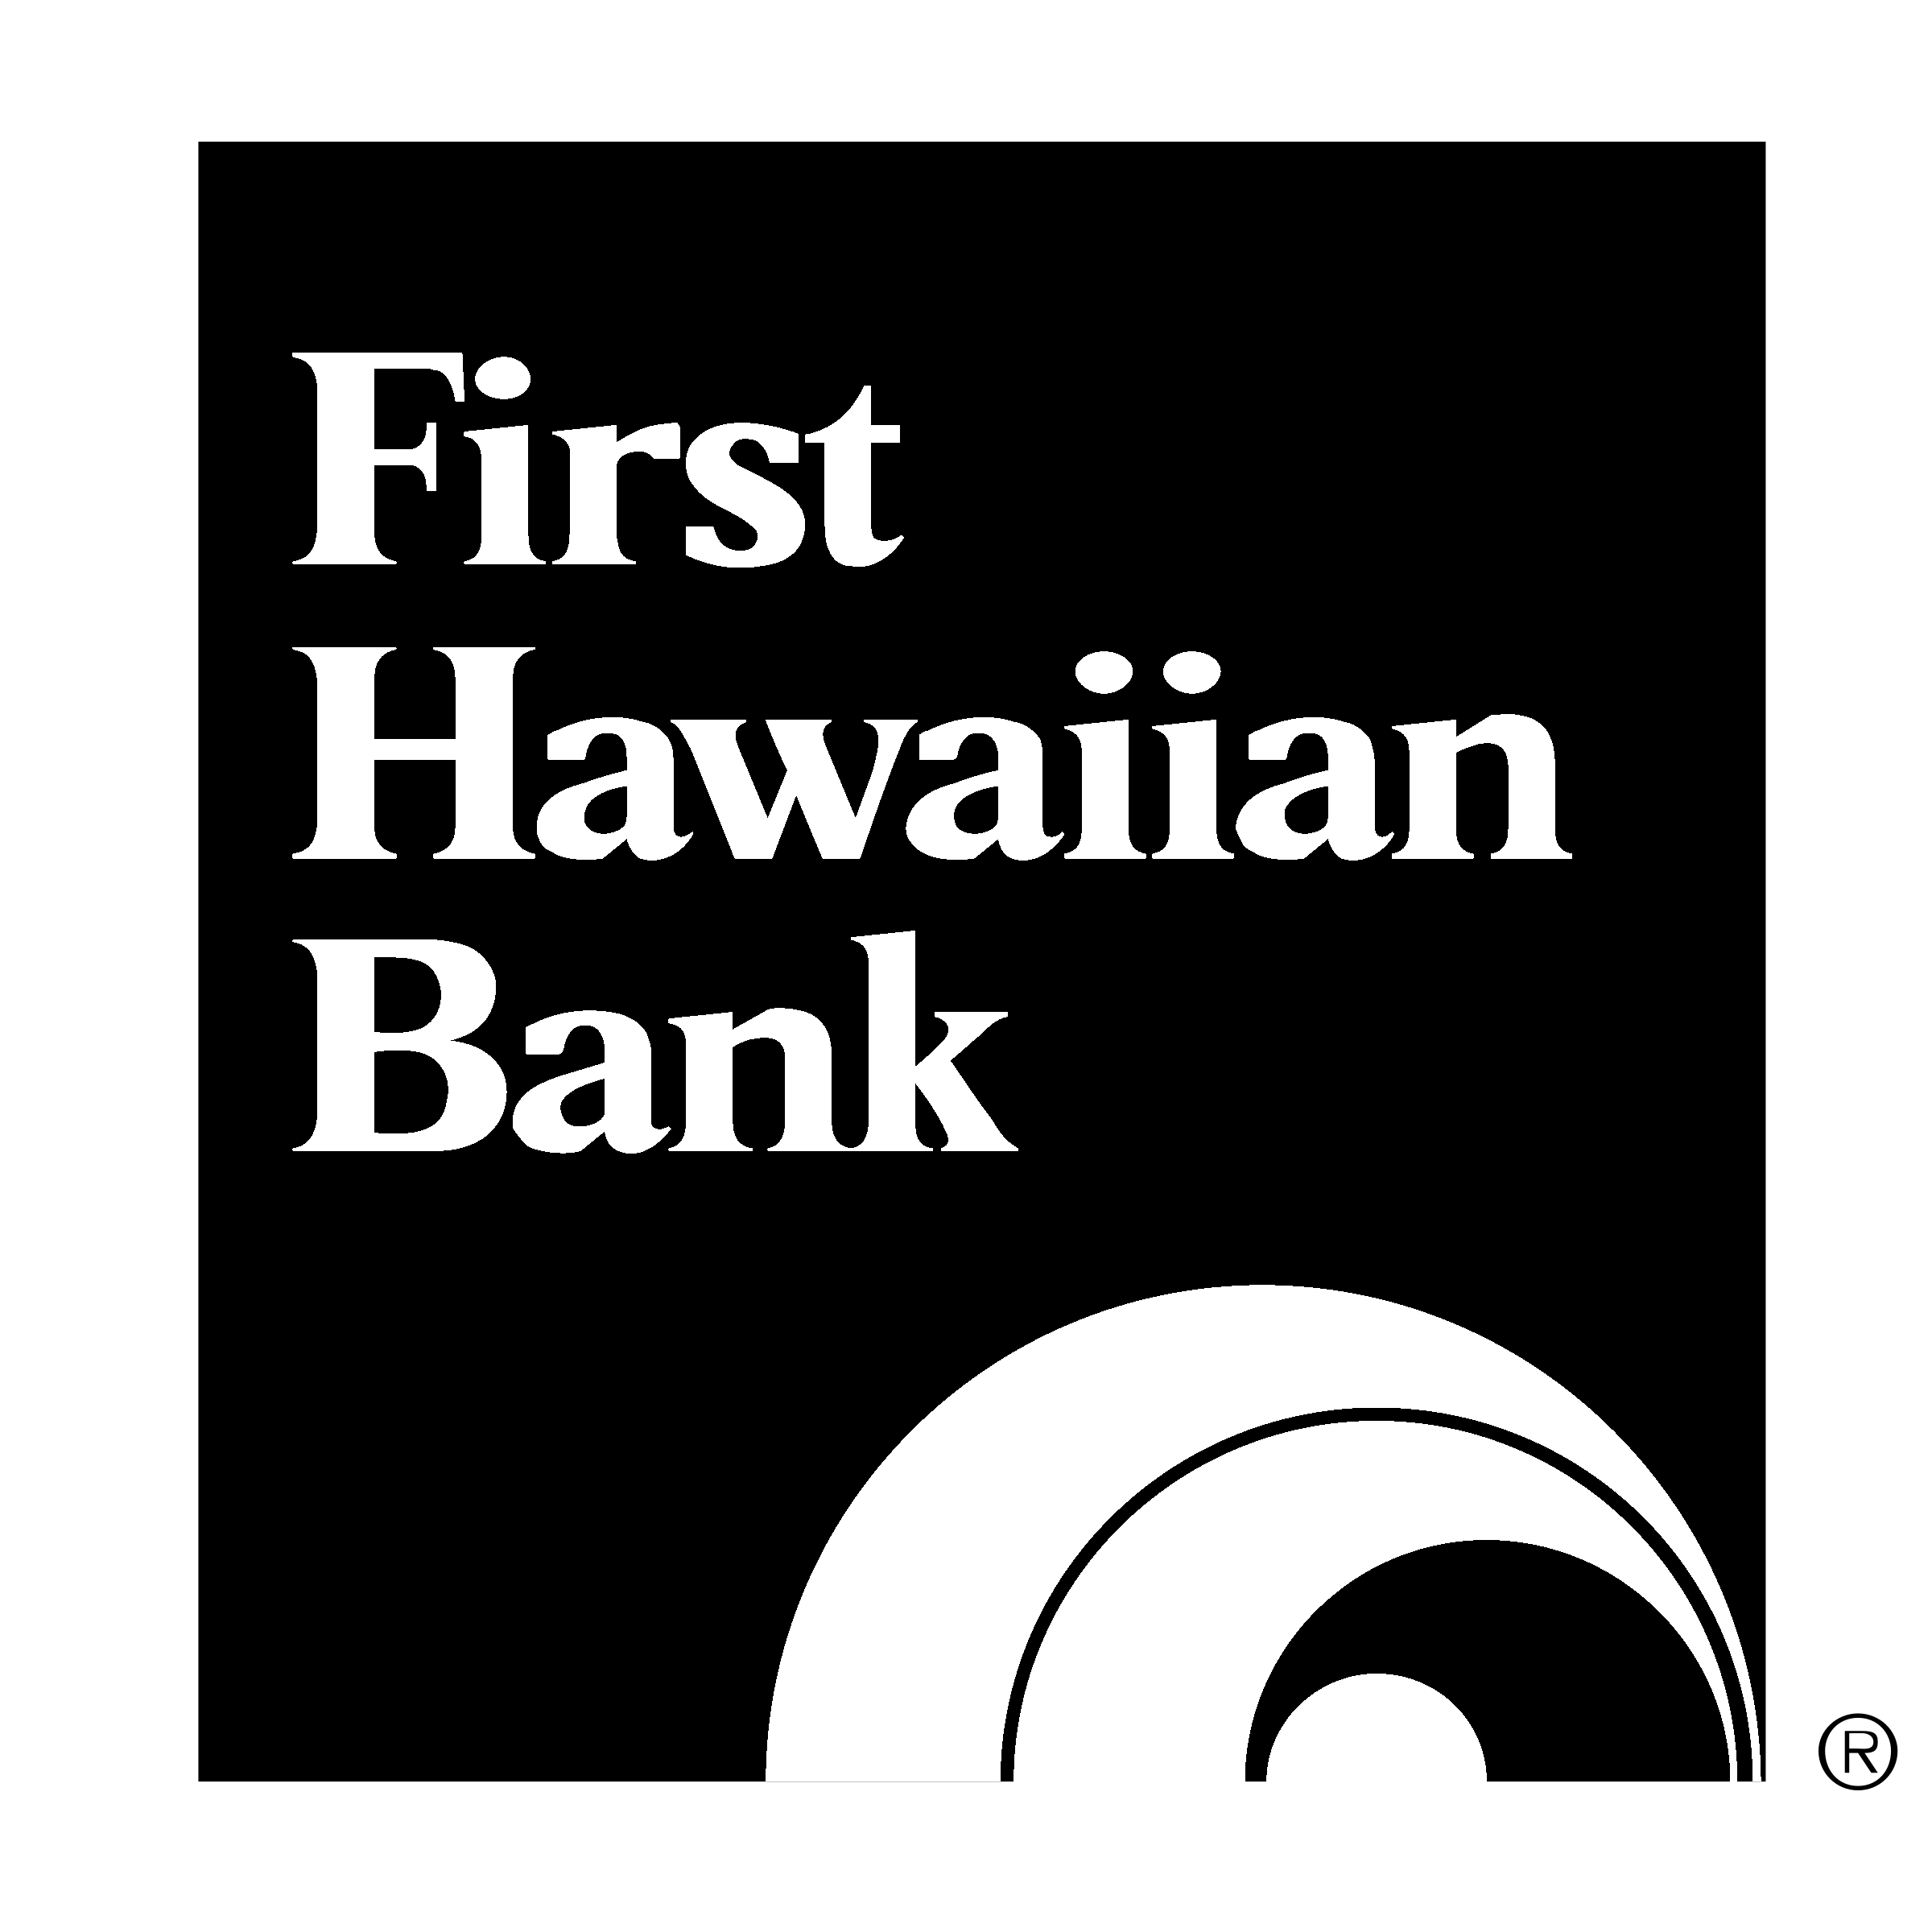 first-hawaiian-bank-logo-black-and-white.png